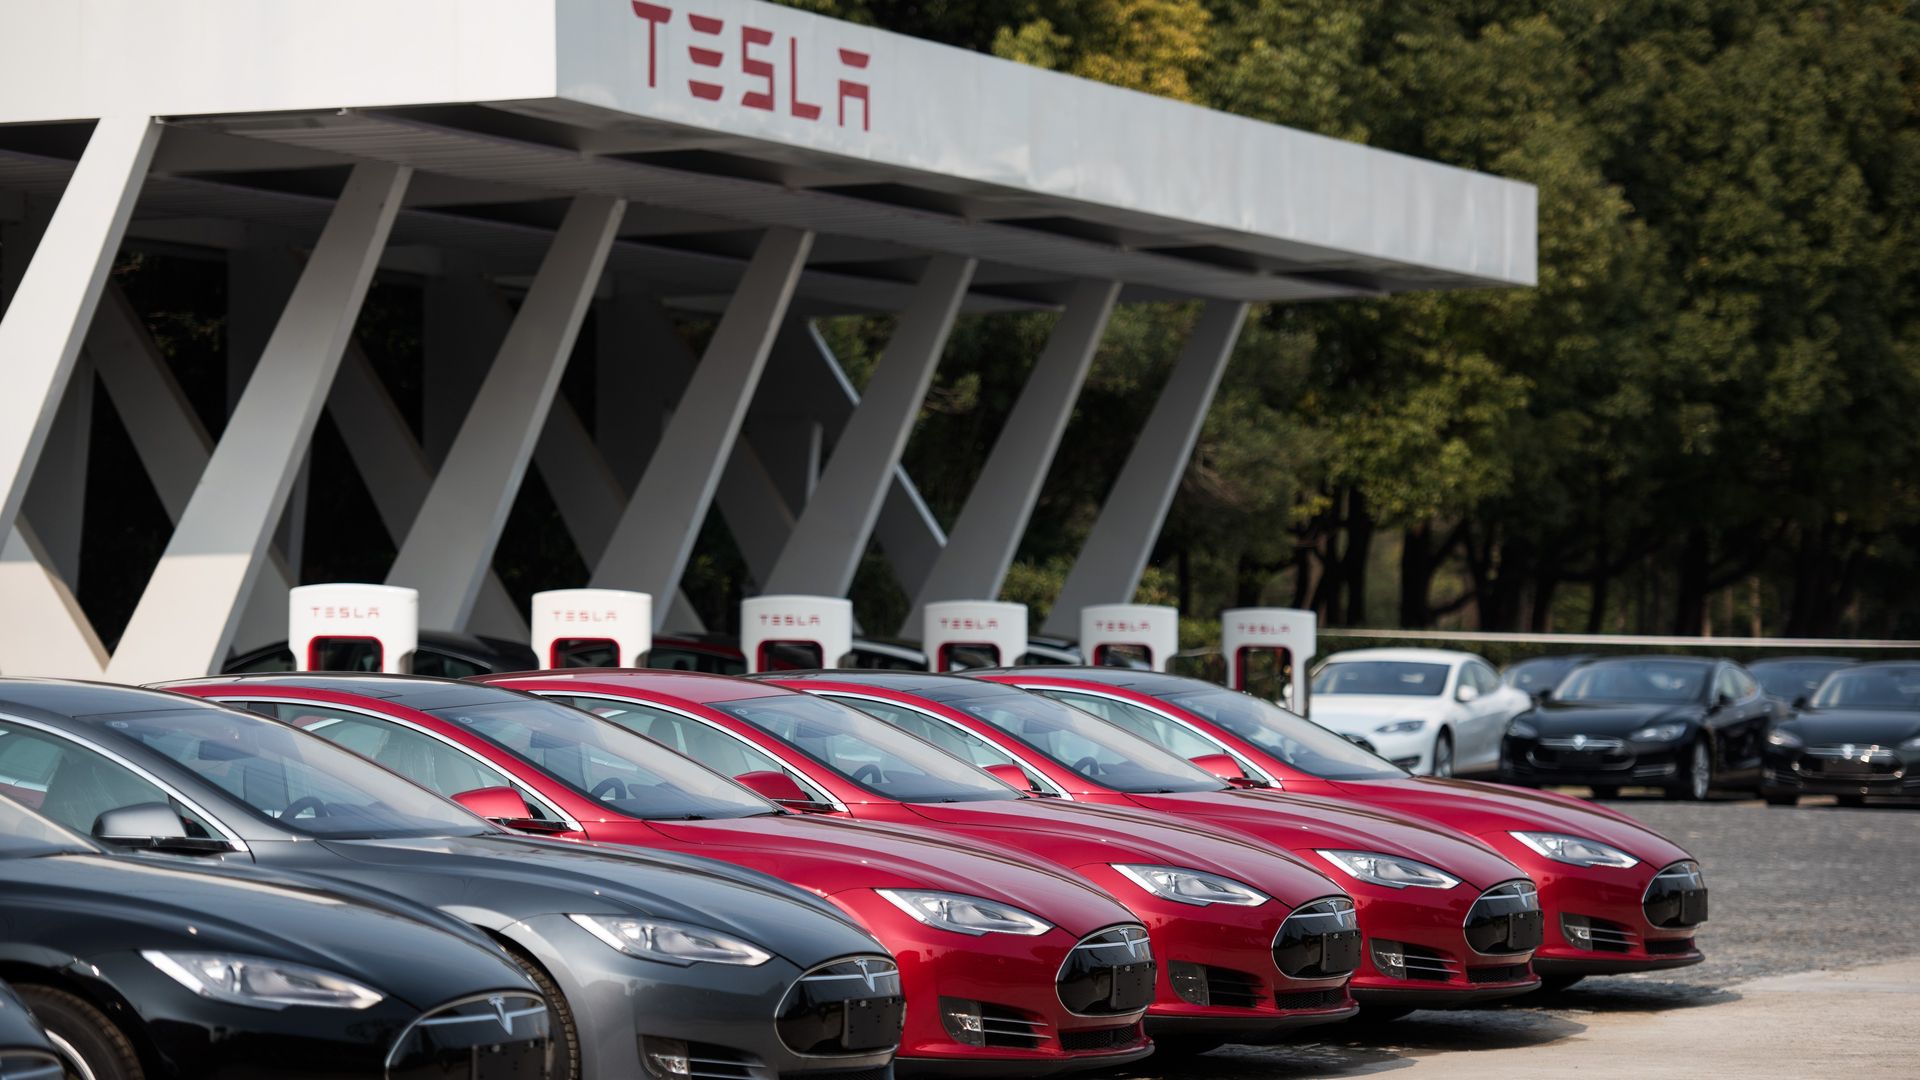 Line up of red Tesla cars at a car dealership outside. 